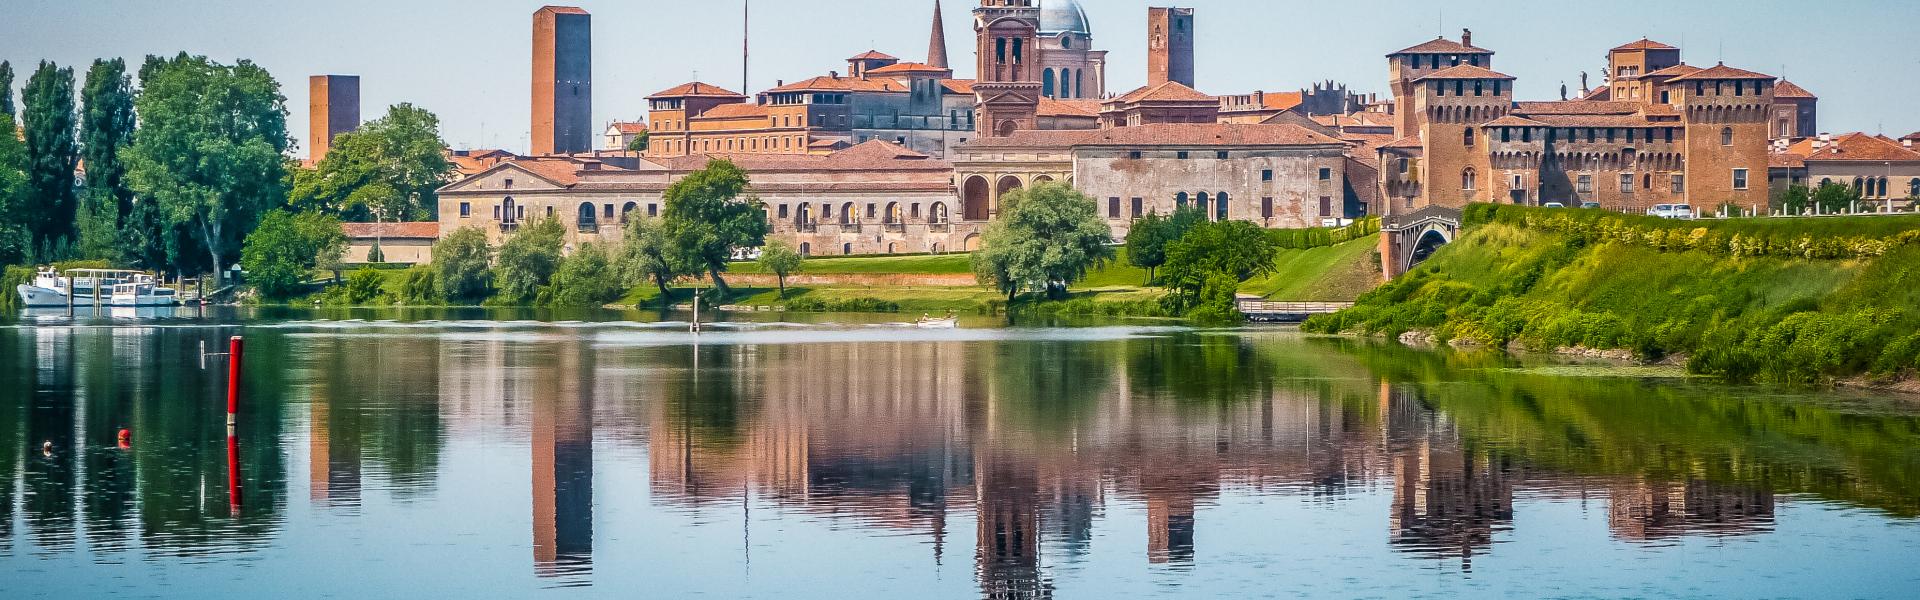 Mantova Scenic View